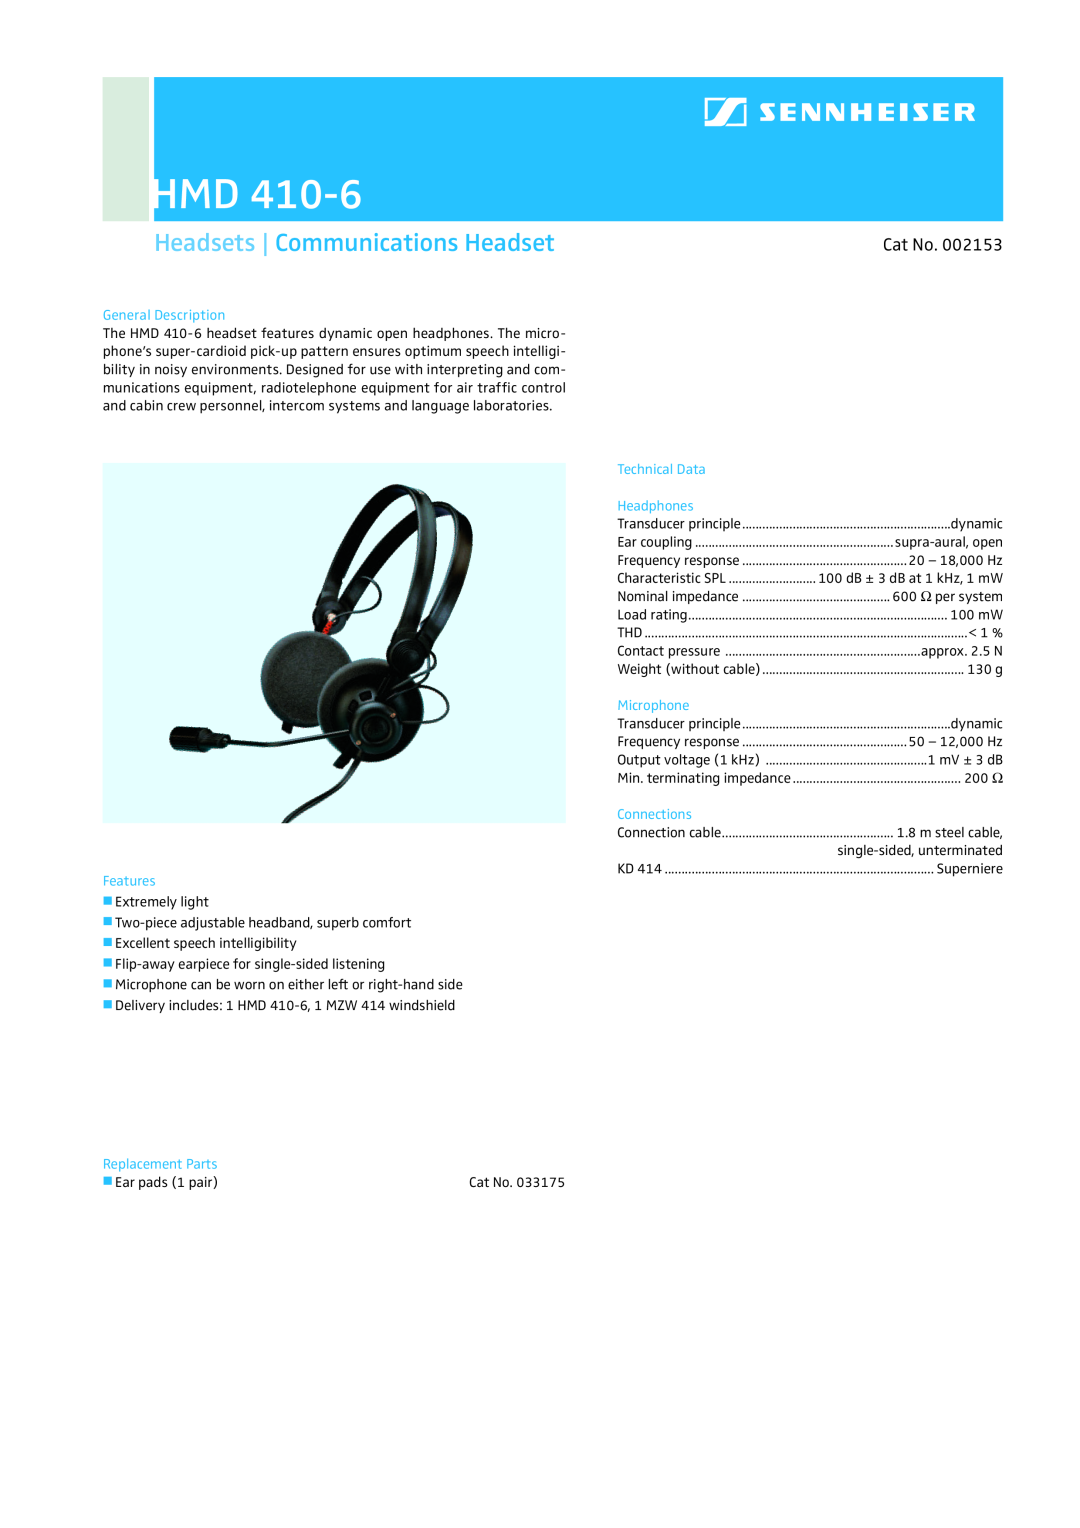 Sennheiser HMD 410-6 manual Headsets Communications Headset, Cat No, General Description, Technical Data, Headphones 